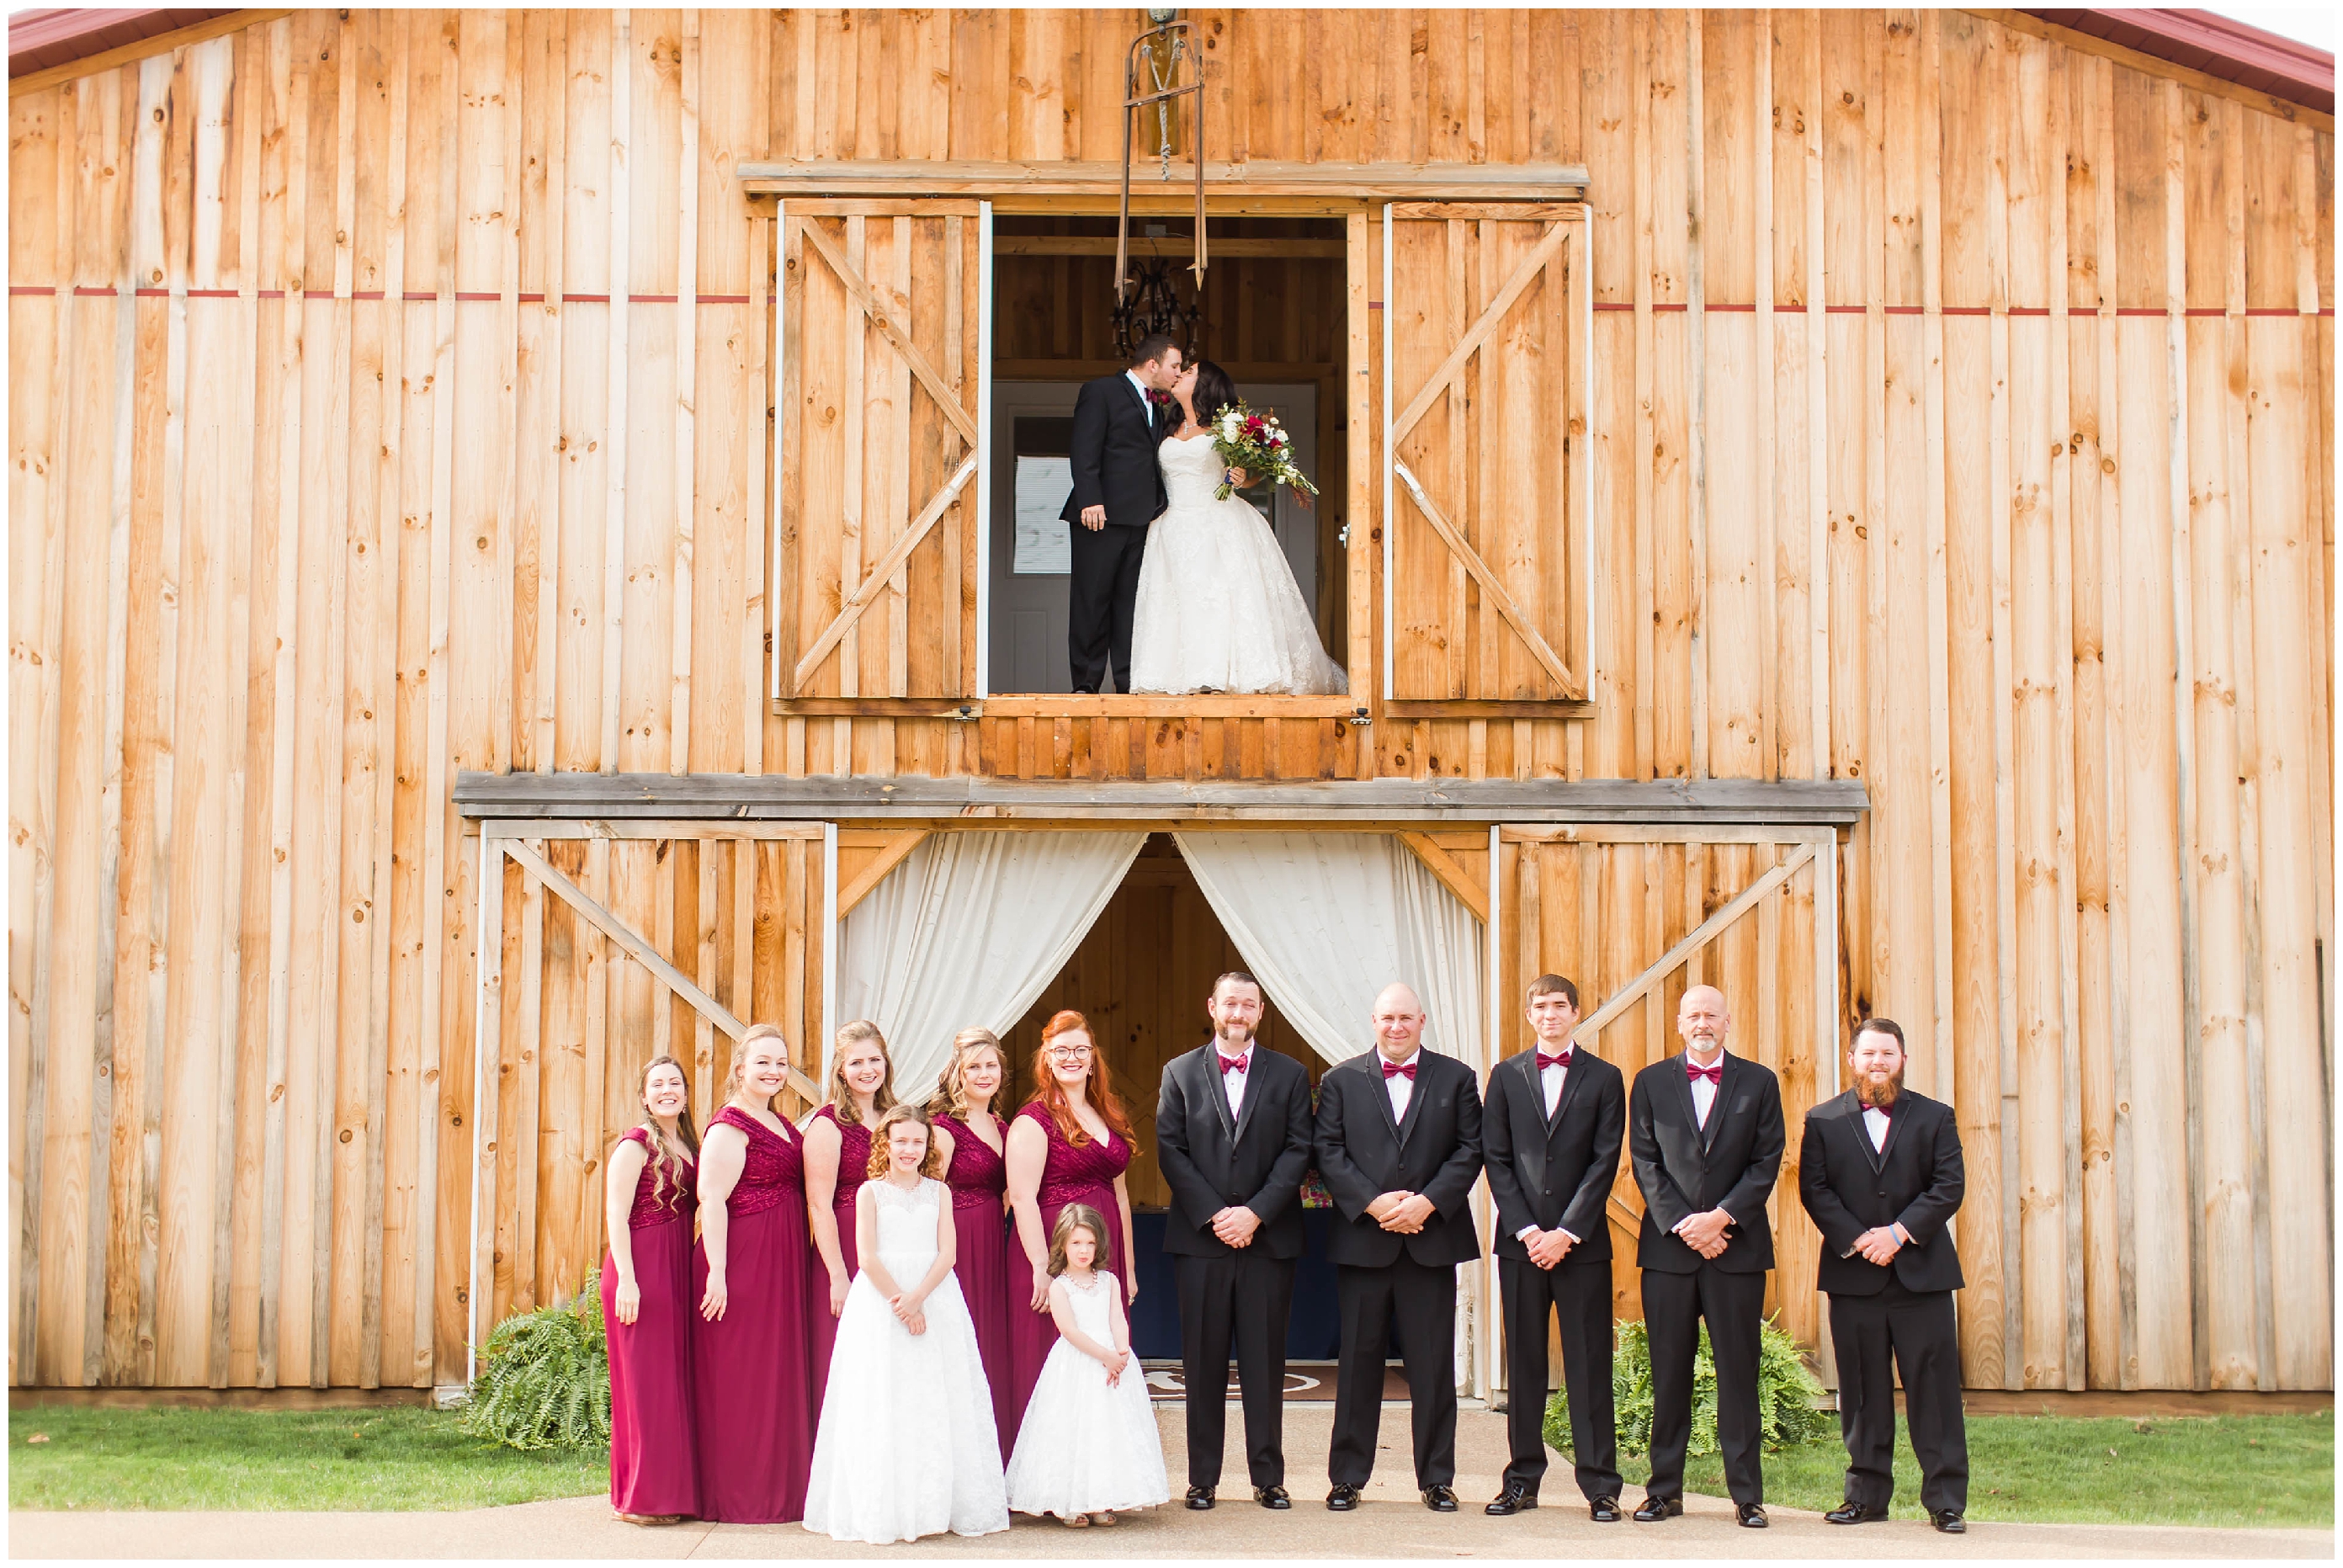 Cleveland Wedding Photographer,Weatherington Woods Wedding,central ohio rustic wedding venue,loren jackson photography,photographer akron ohio,rustic barn wedding,